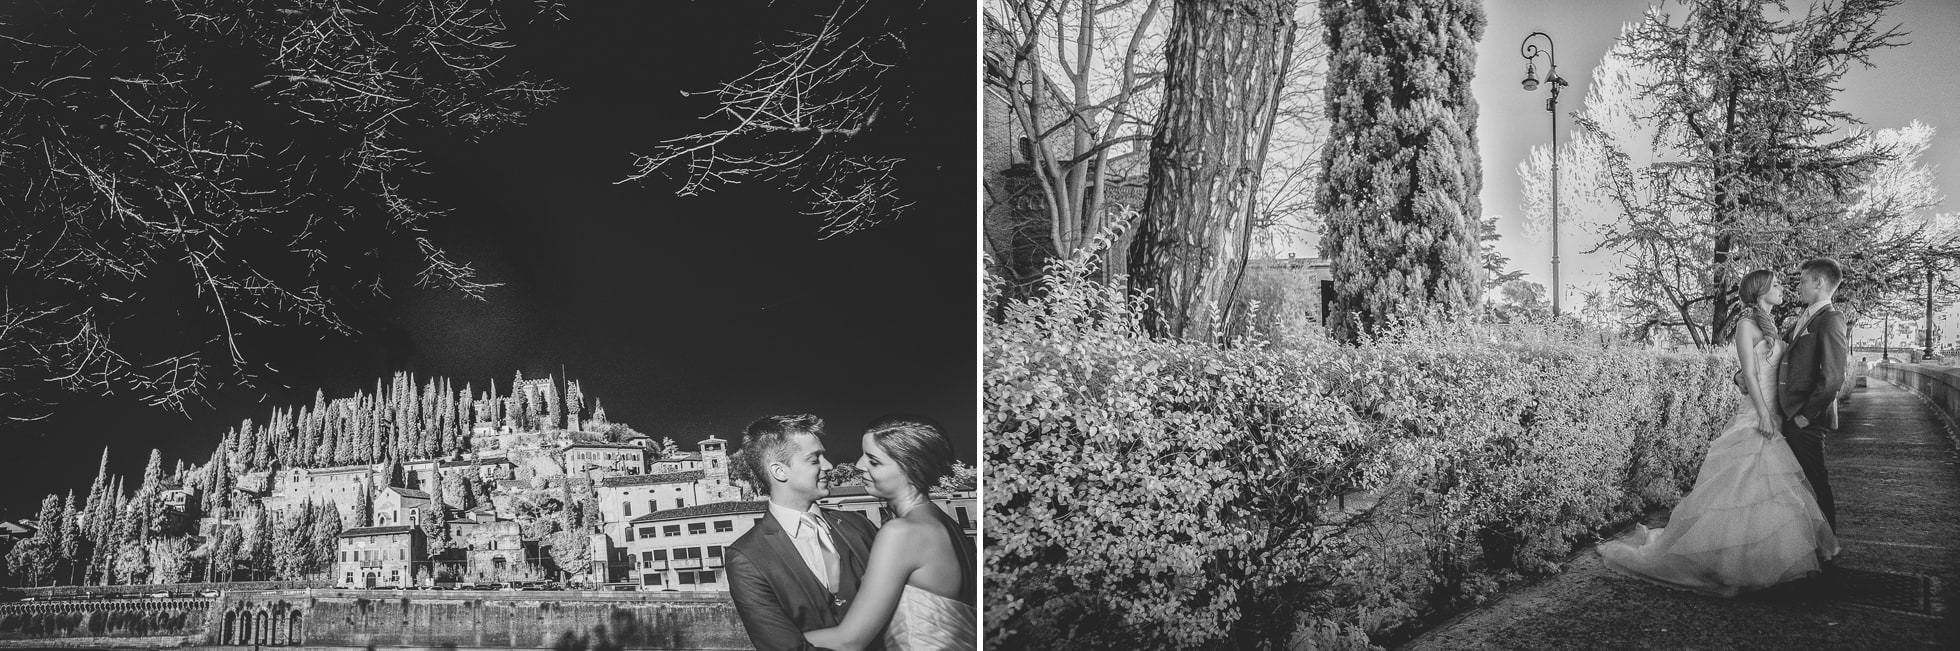 fotografo matrimonio verona infrarosso